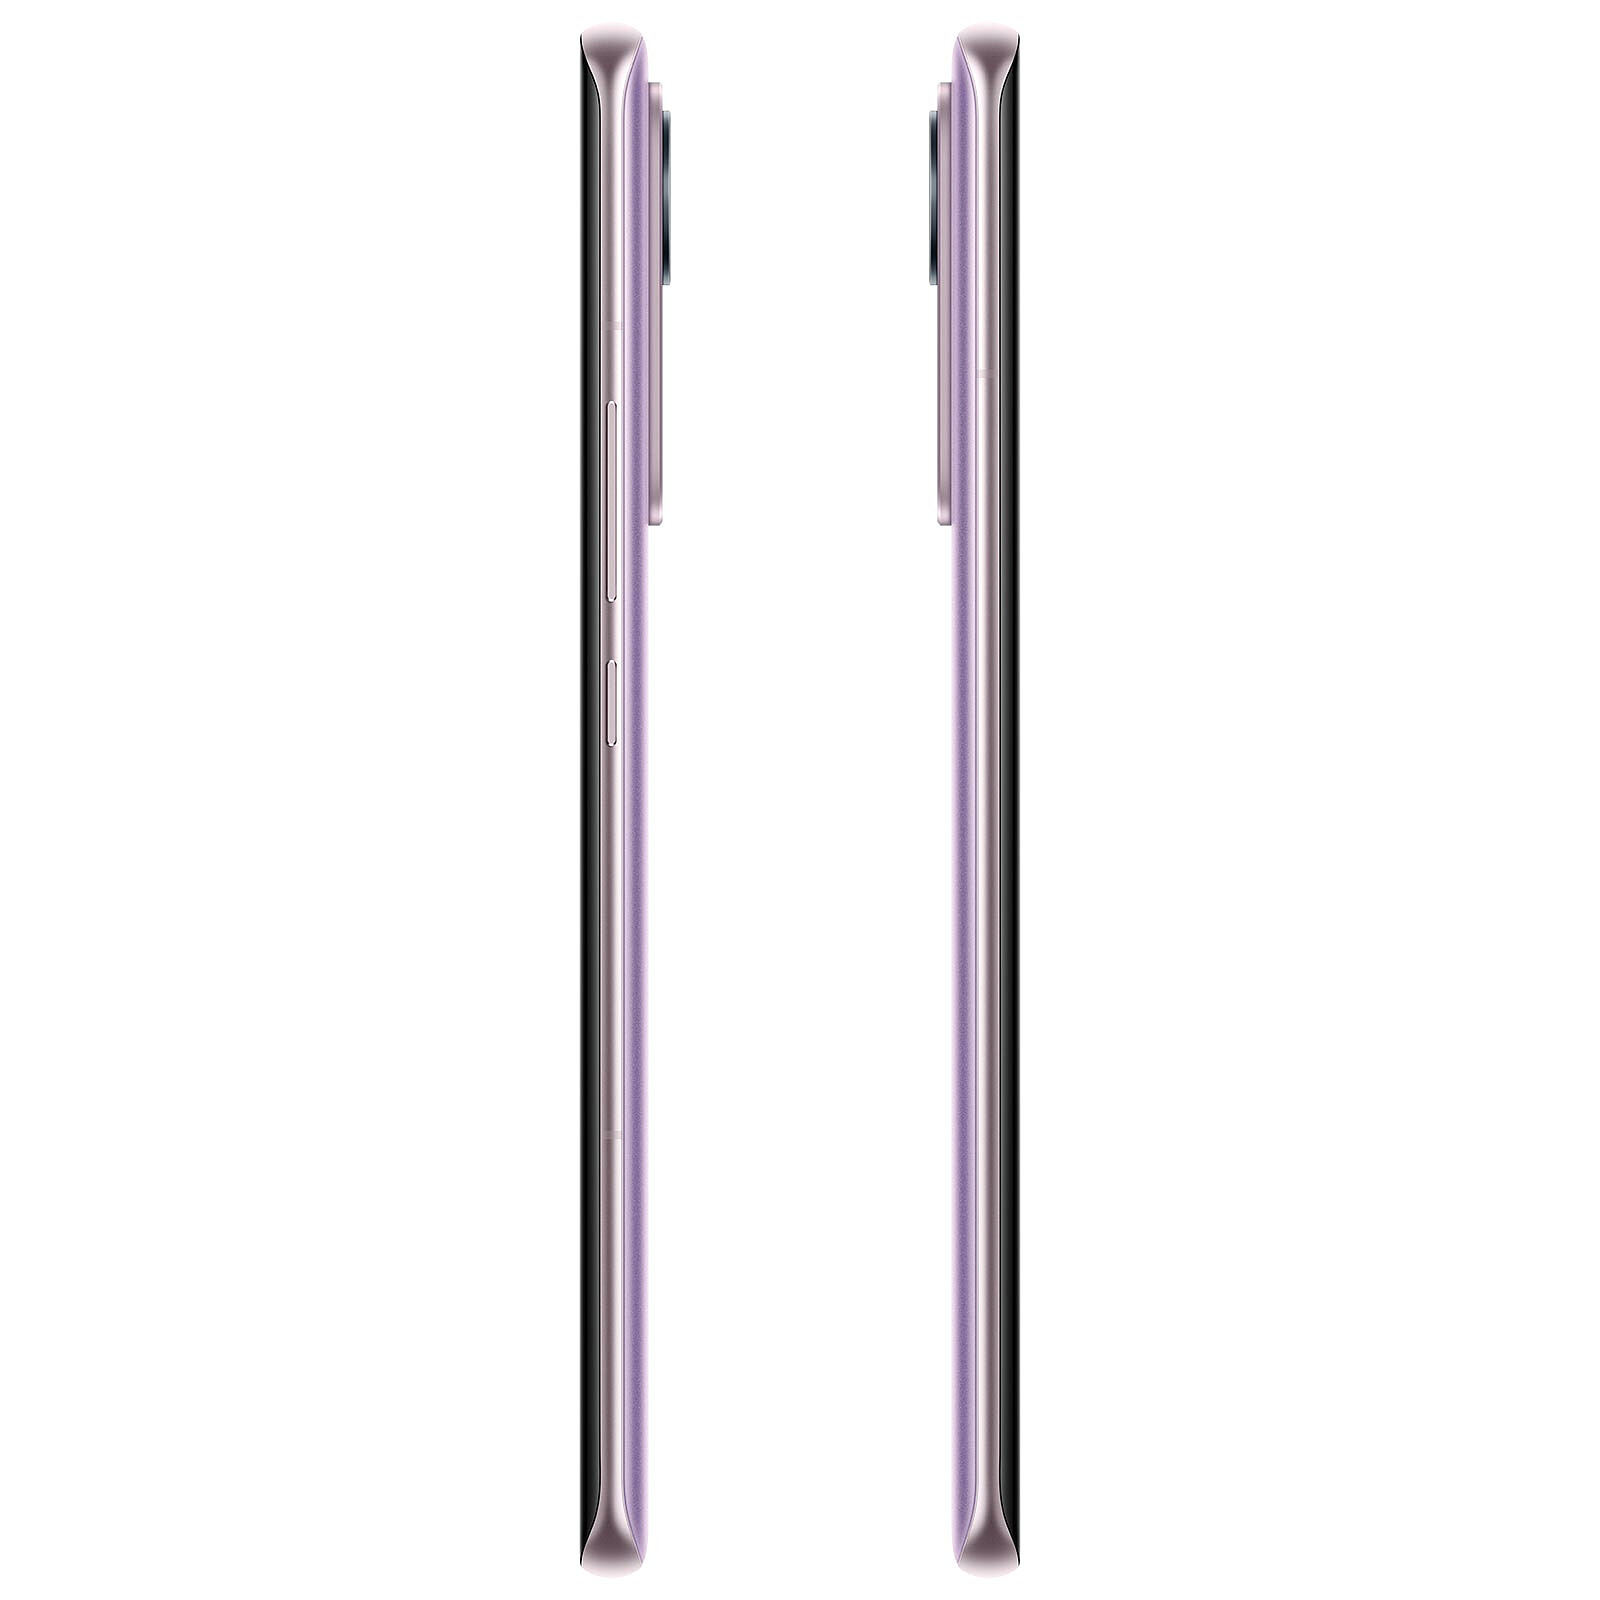 Xiaomi Mi 12T Pro Silver (8GB / 256GB) - Mobile phone & smartphone - LDLC  3-year warranty